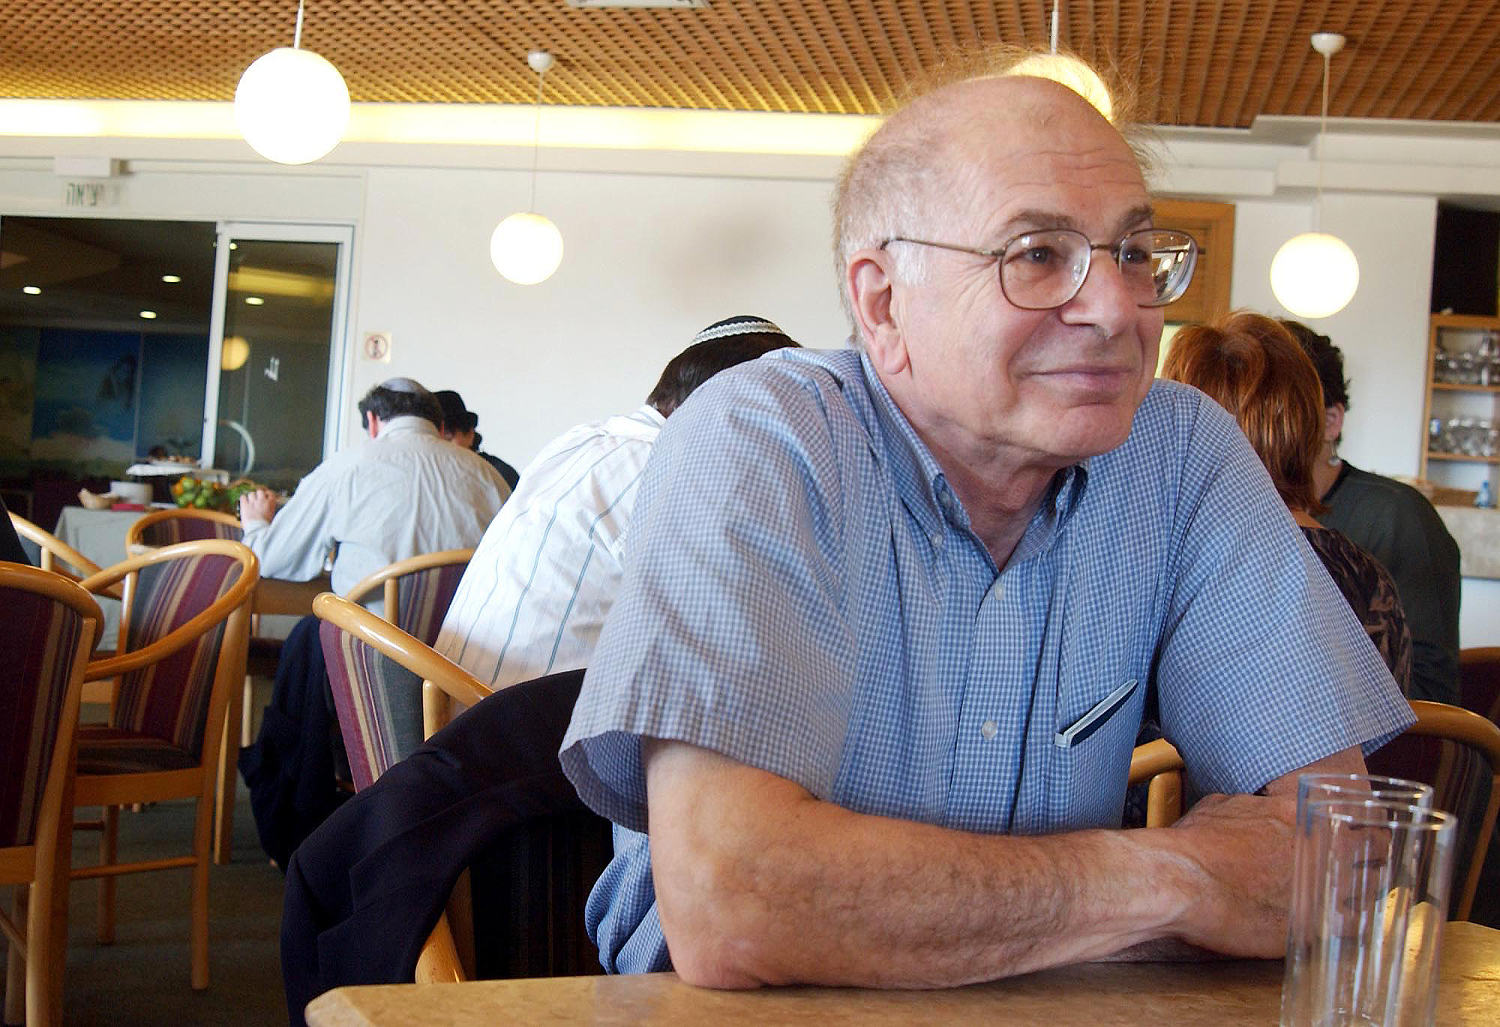 Nobelist Daniel Kahneman, a pioneer of behavioral economics, dead at 90